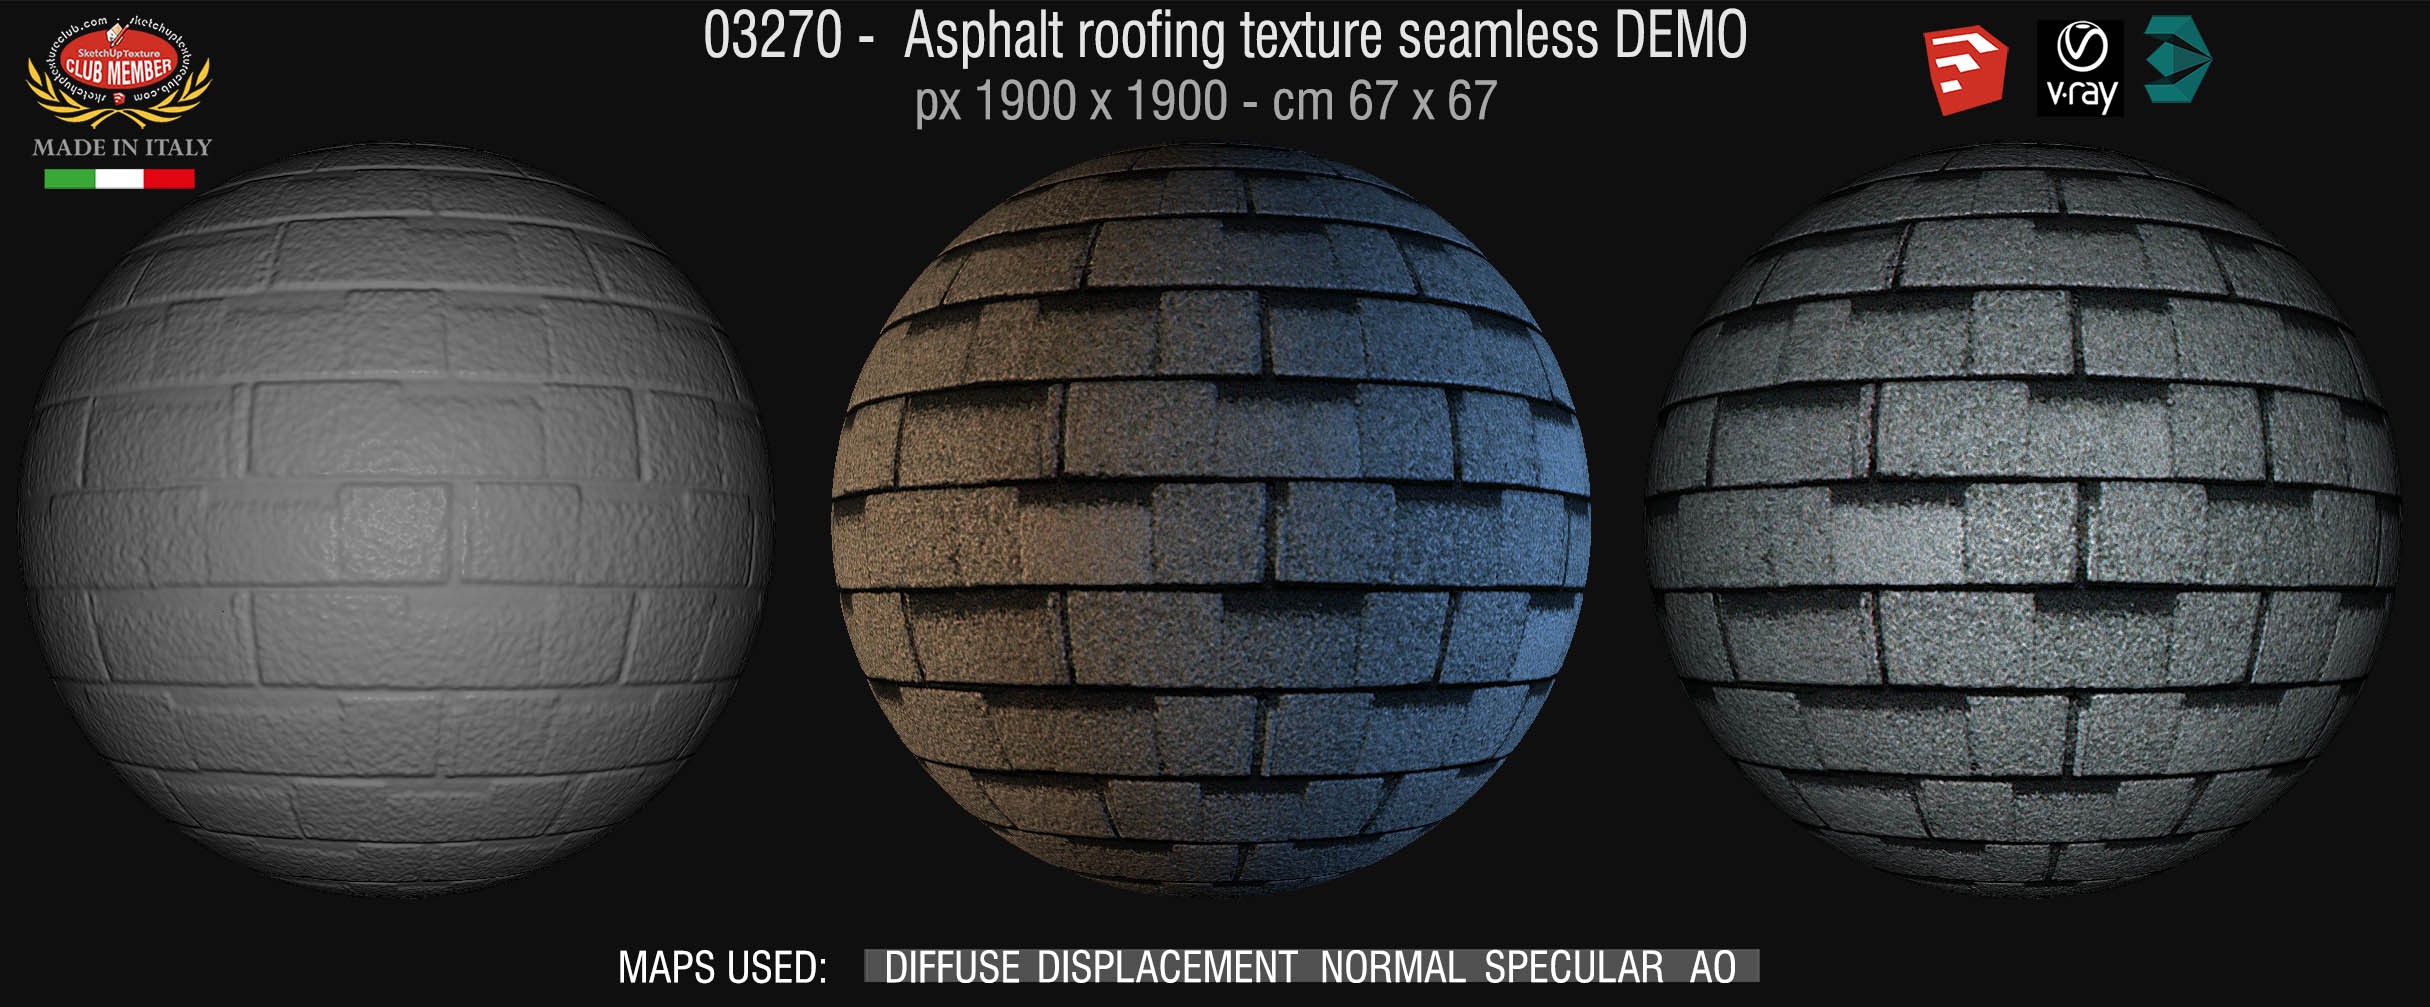 03270 Asphalt roofing texture + maps DEMO